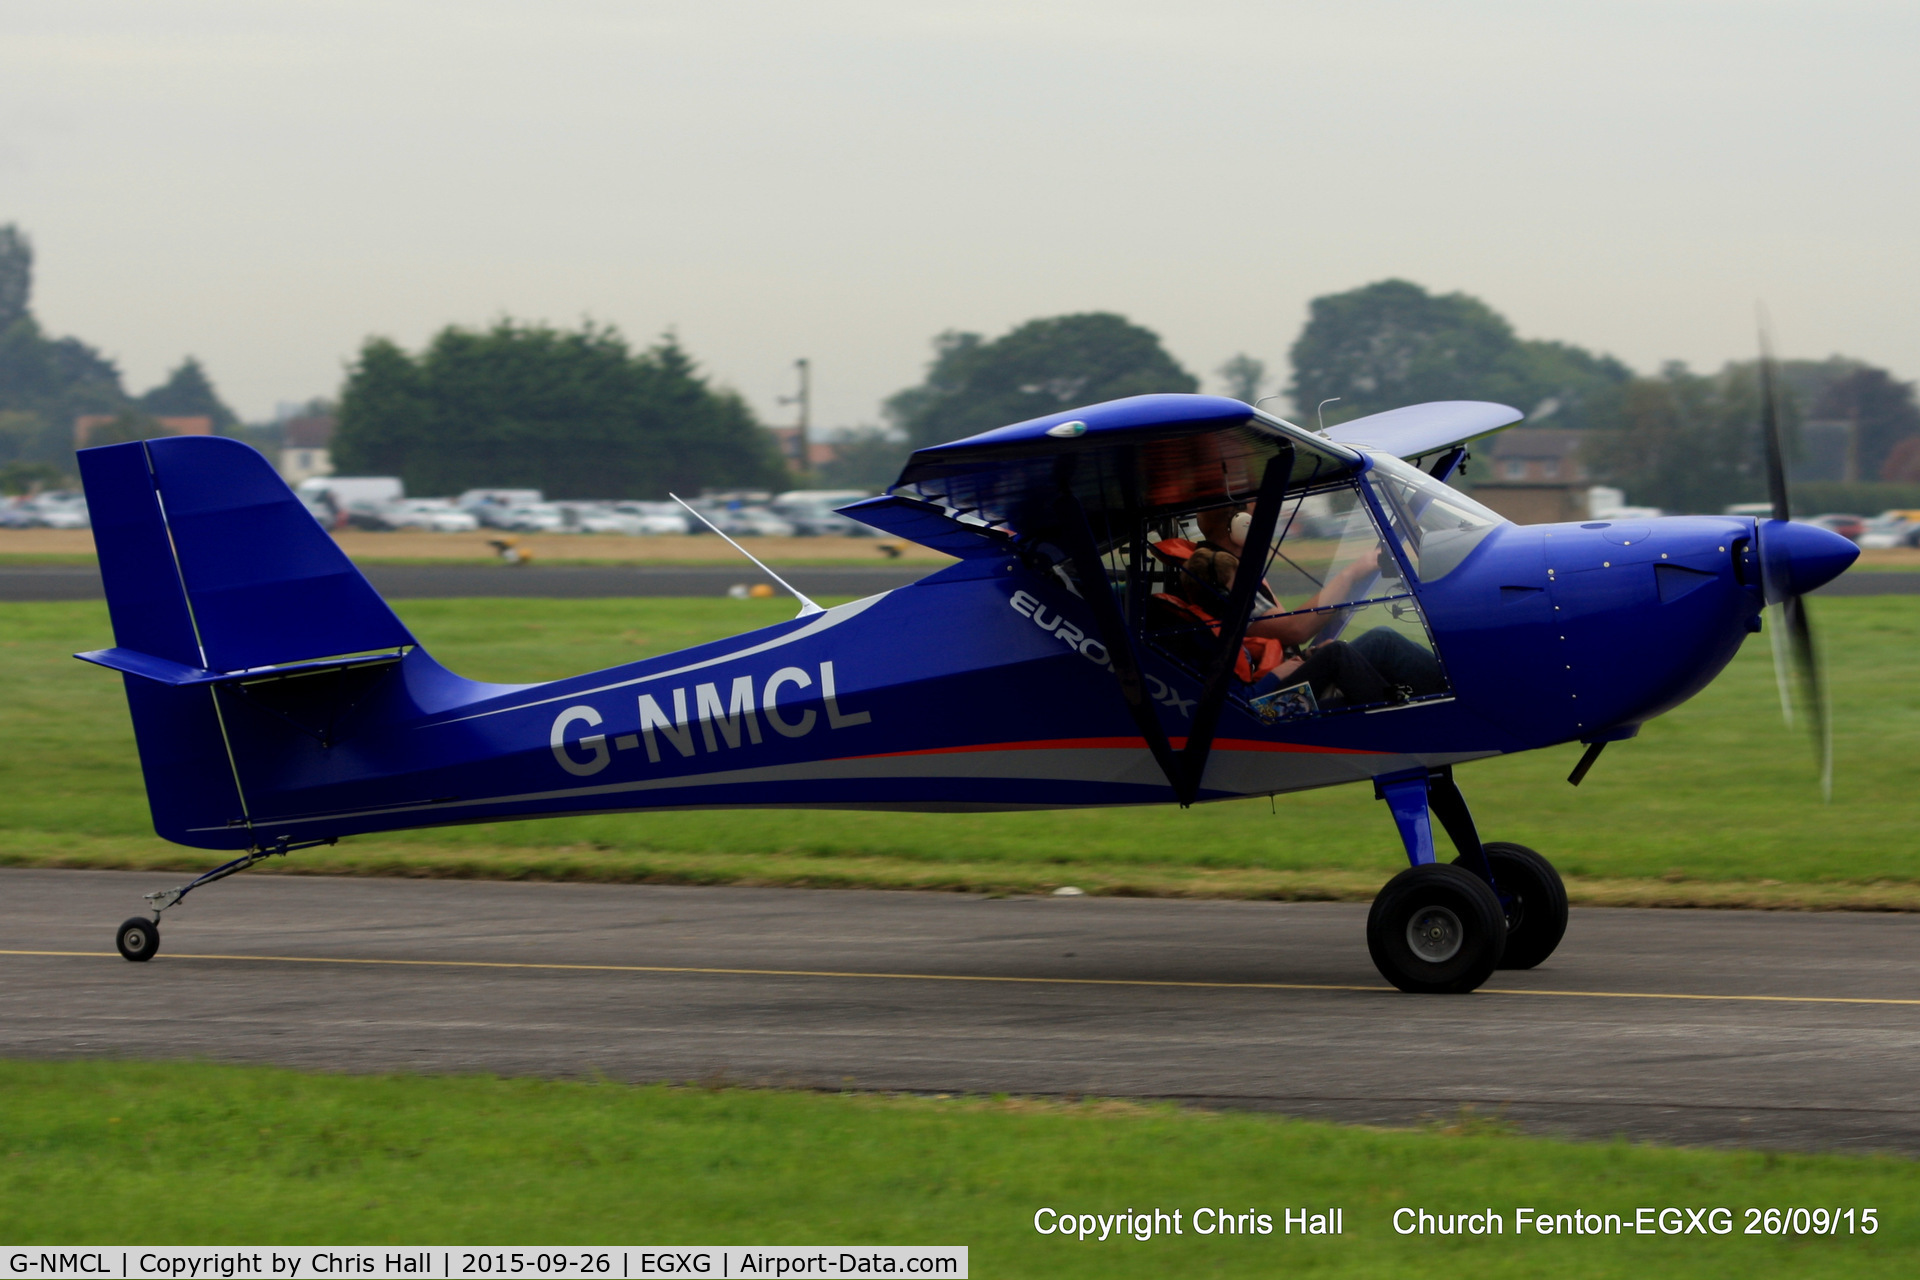 G-NMCL, 2013 Aeropro Eurofox 912(S) C/N LAA 376-15108, at the Yorkshire Airshow